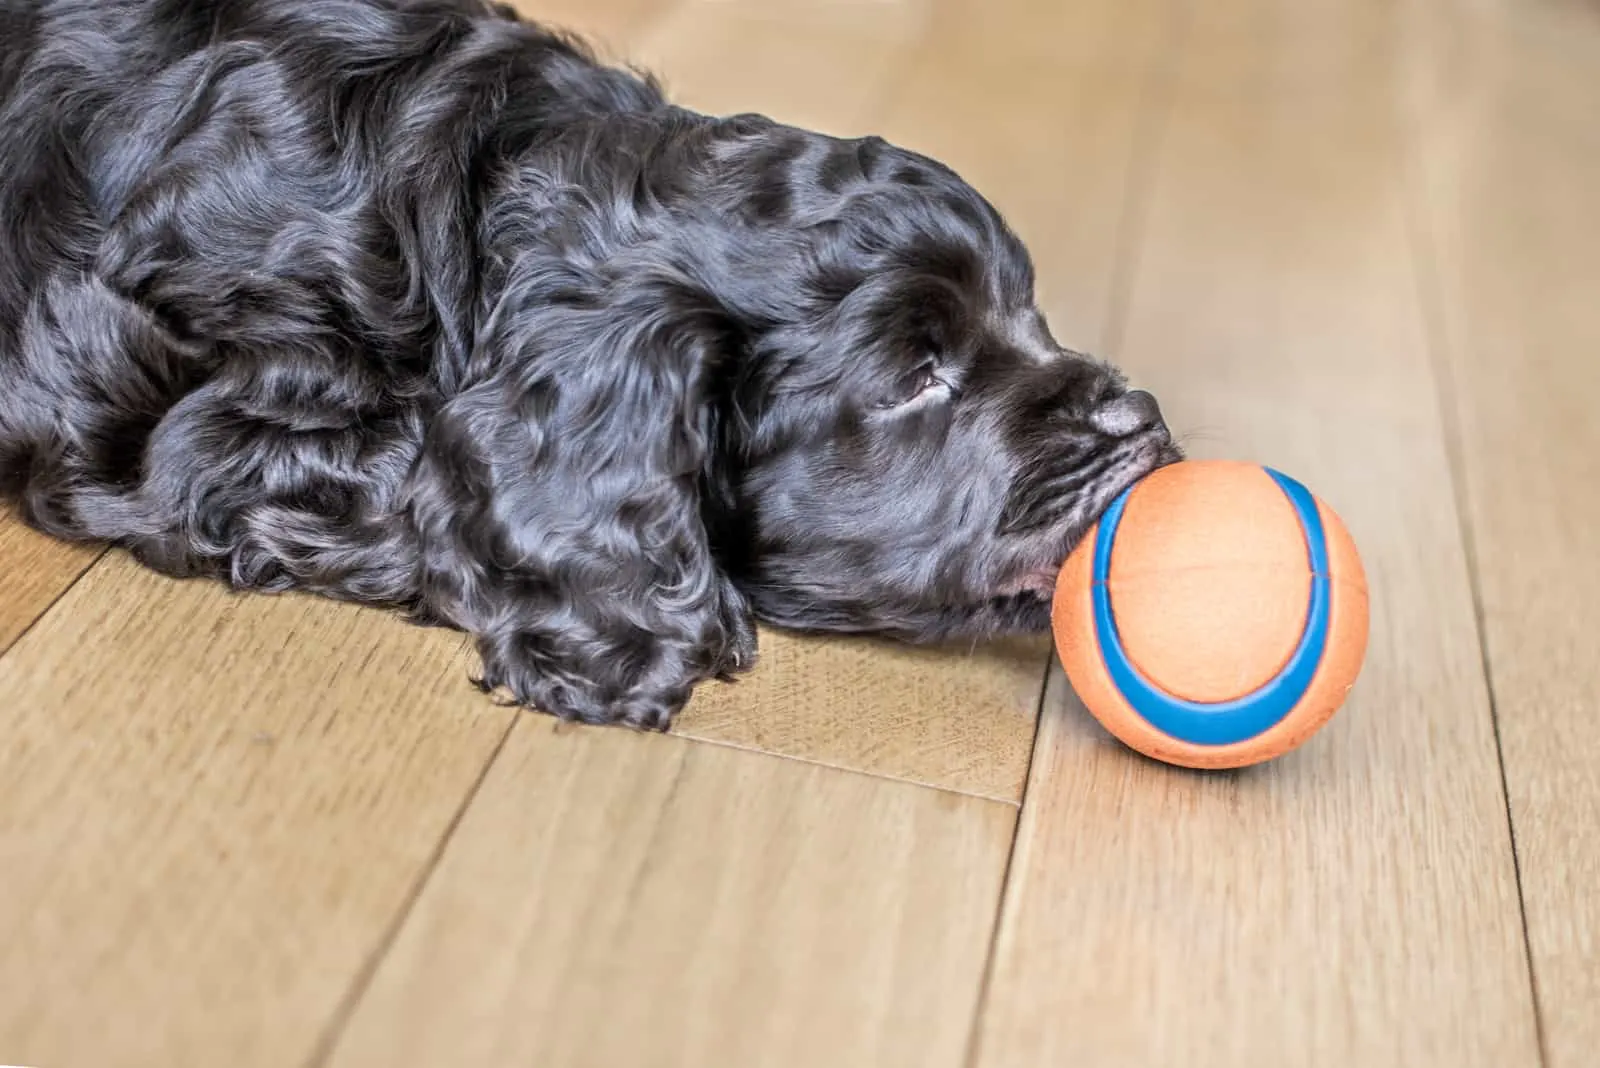 Boykin Spaniel puppy with a ball